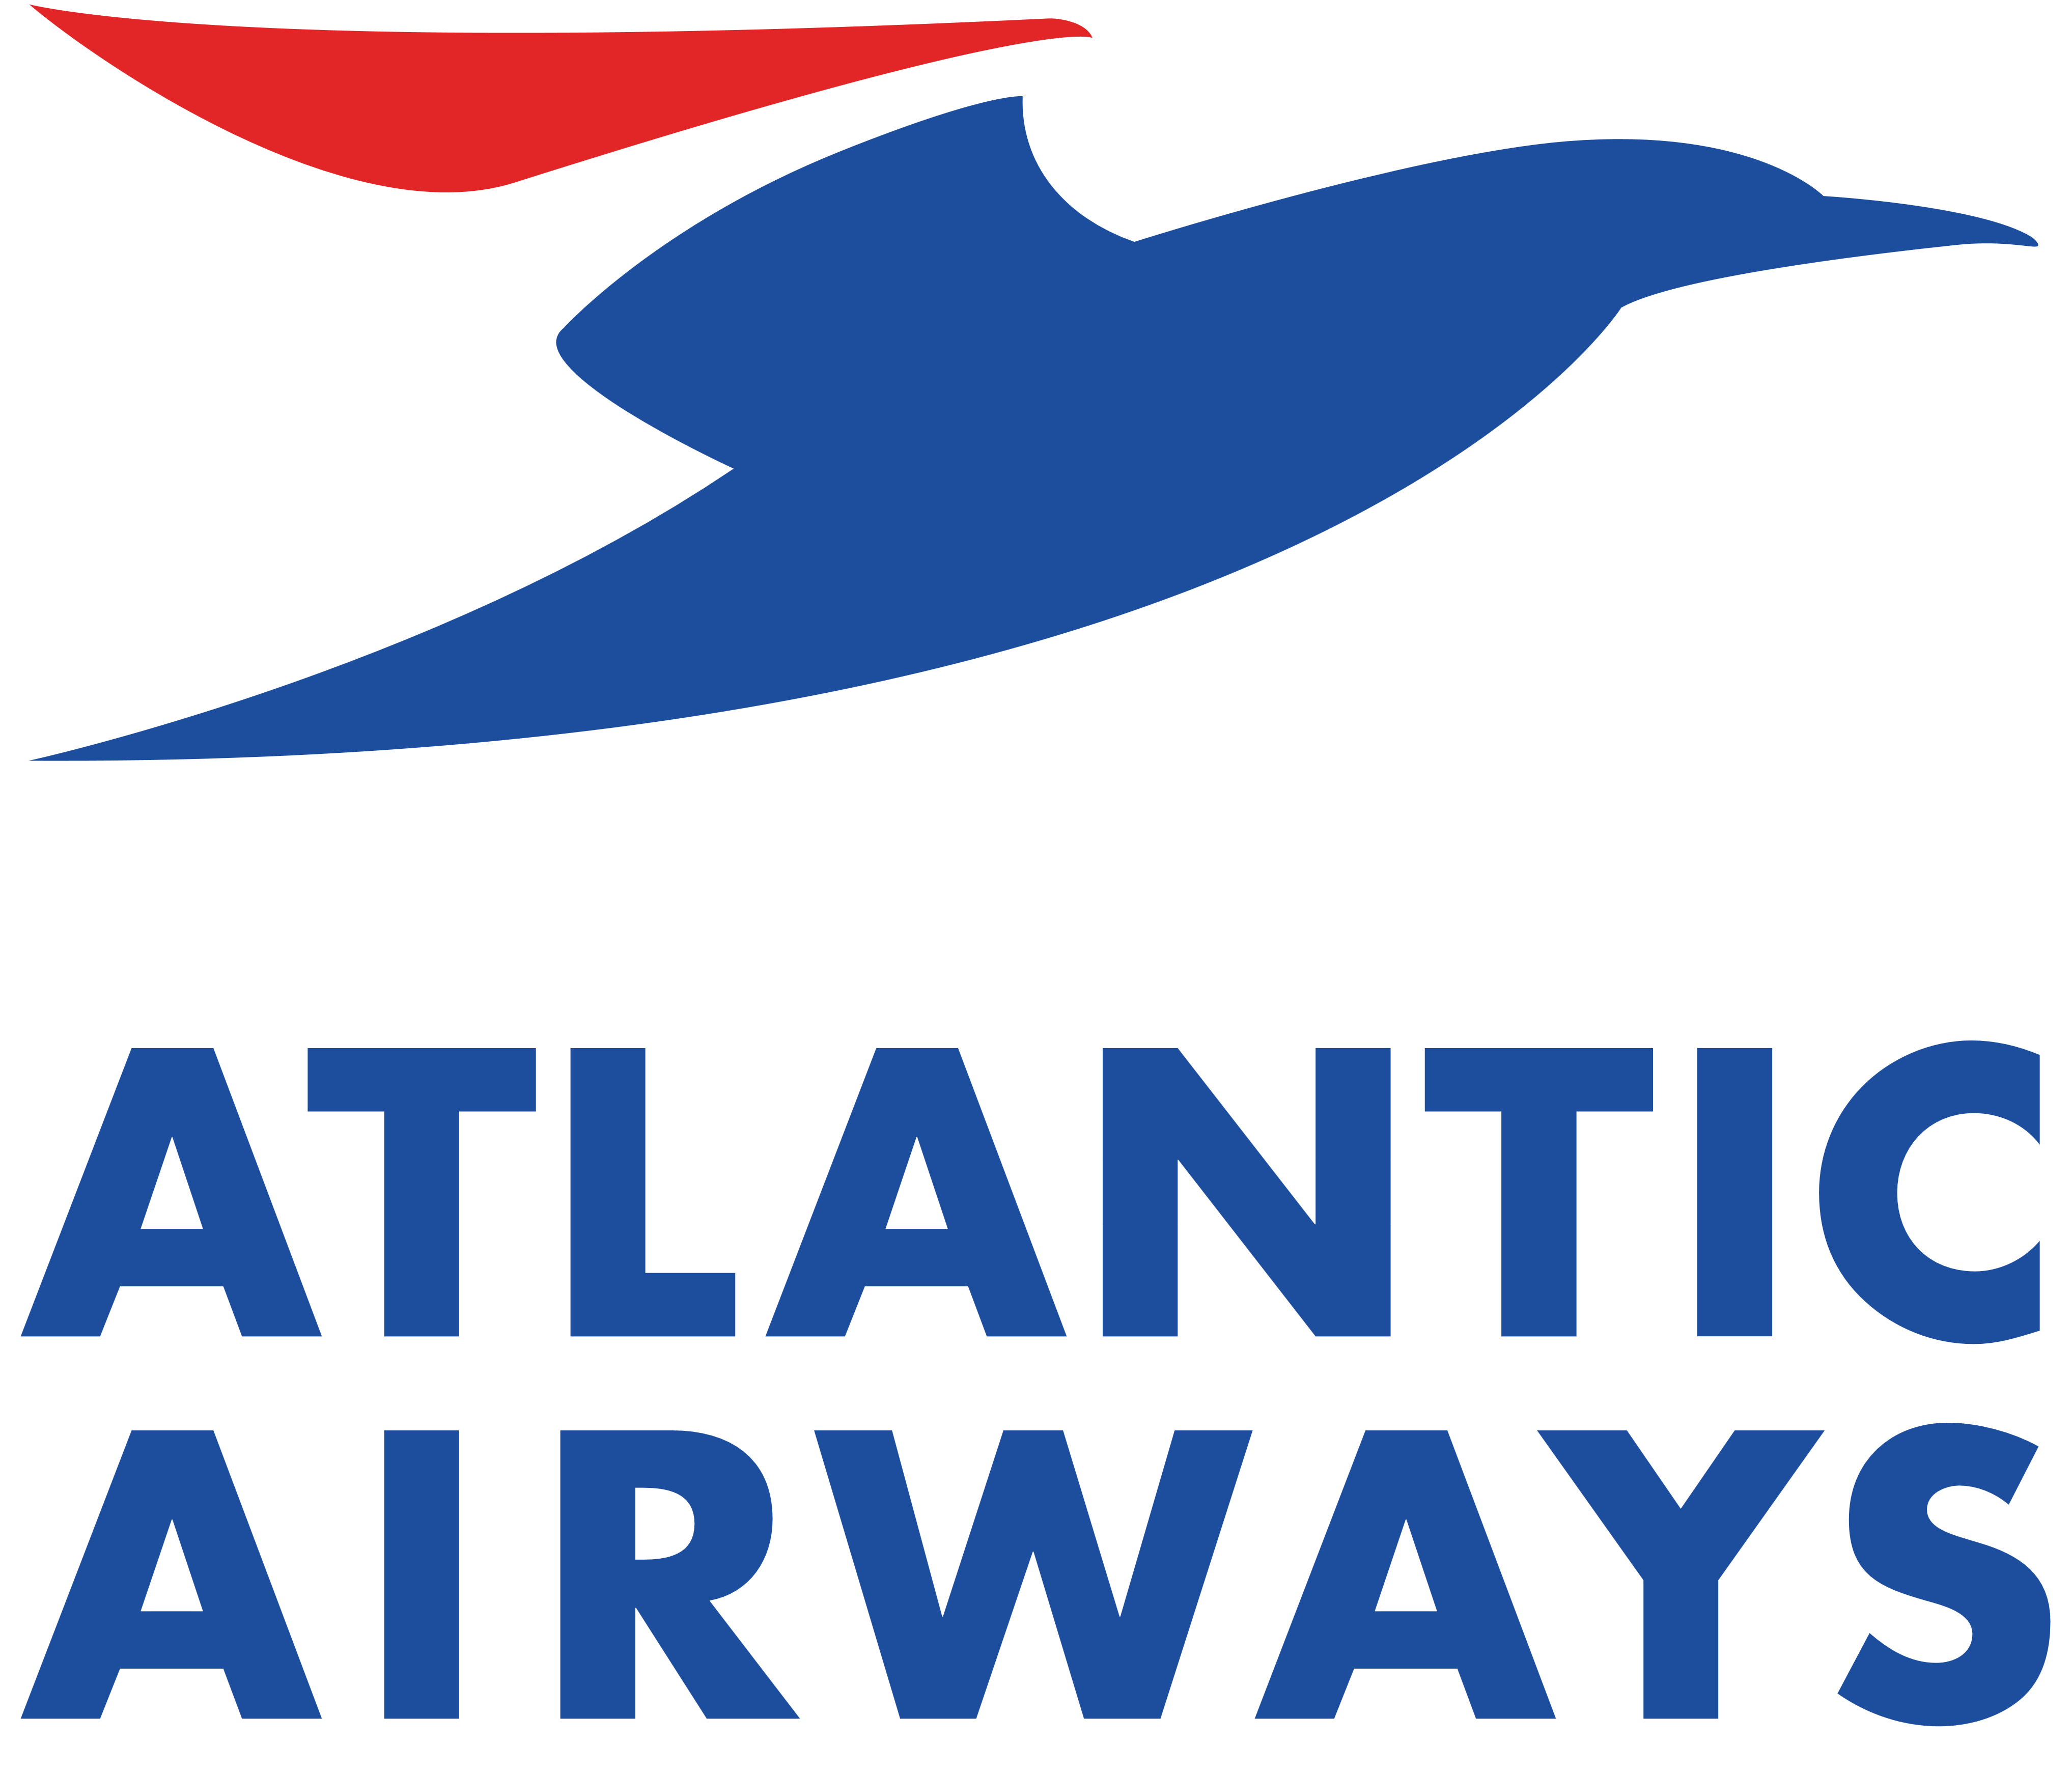 Atlantic Airways logo, logotype